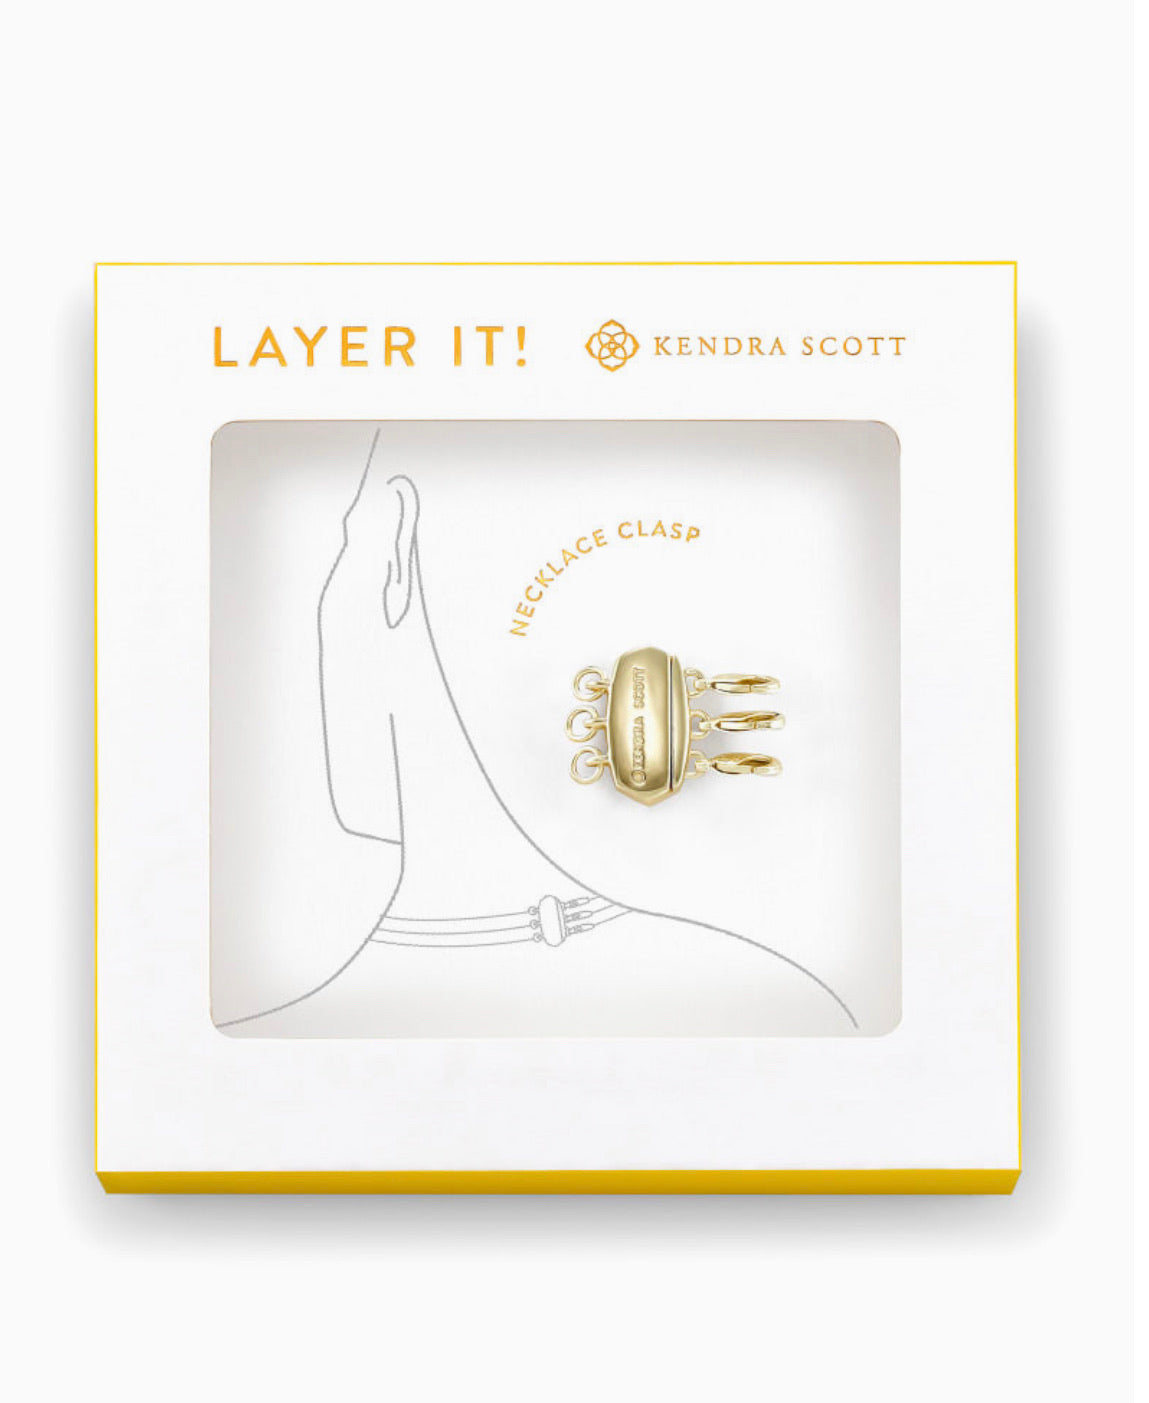 Kendra Scott Layer It! Necklace Clasp